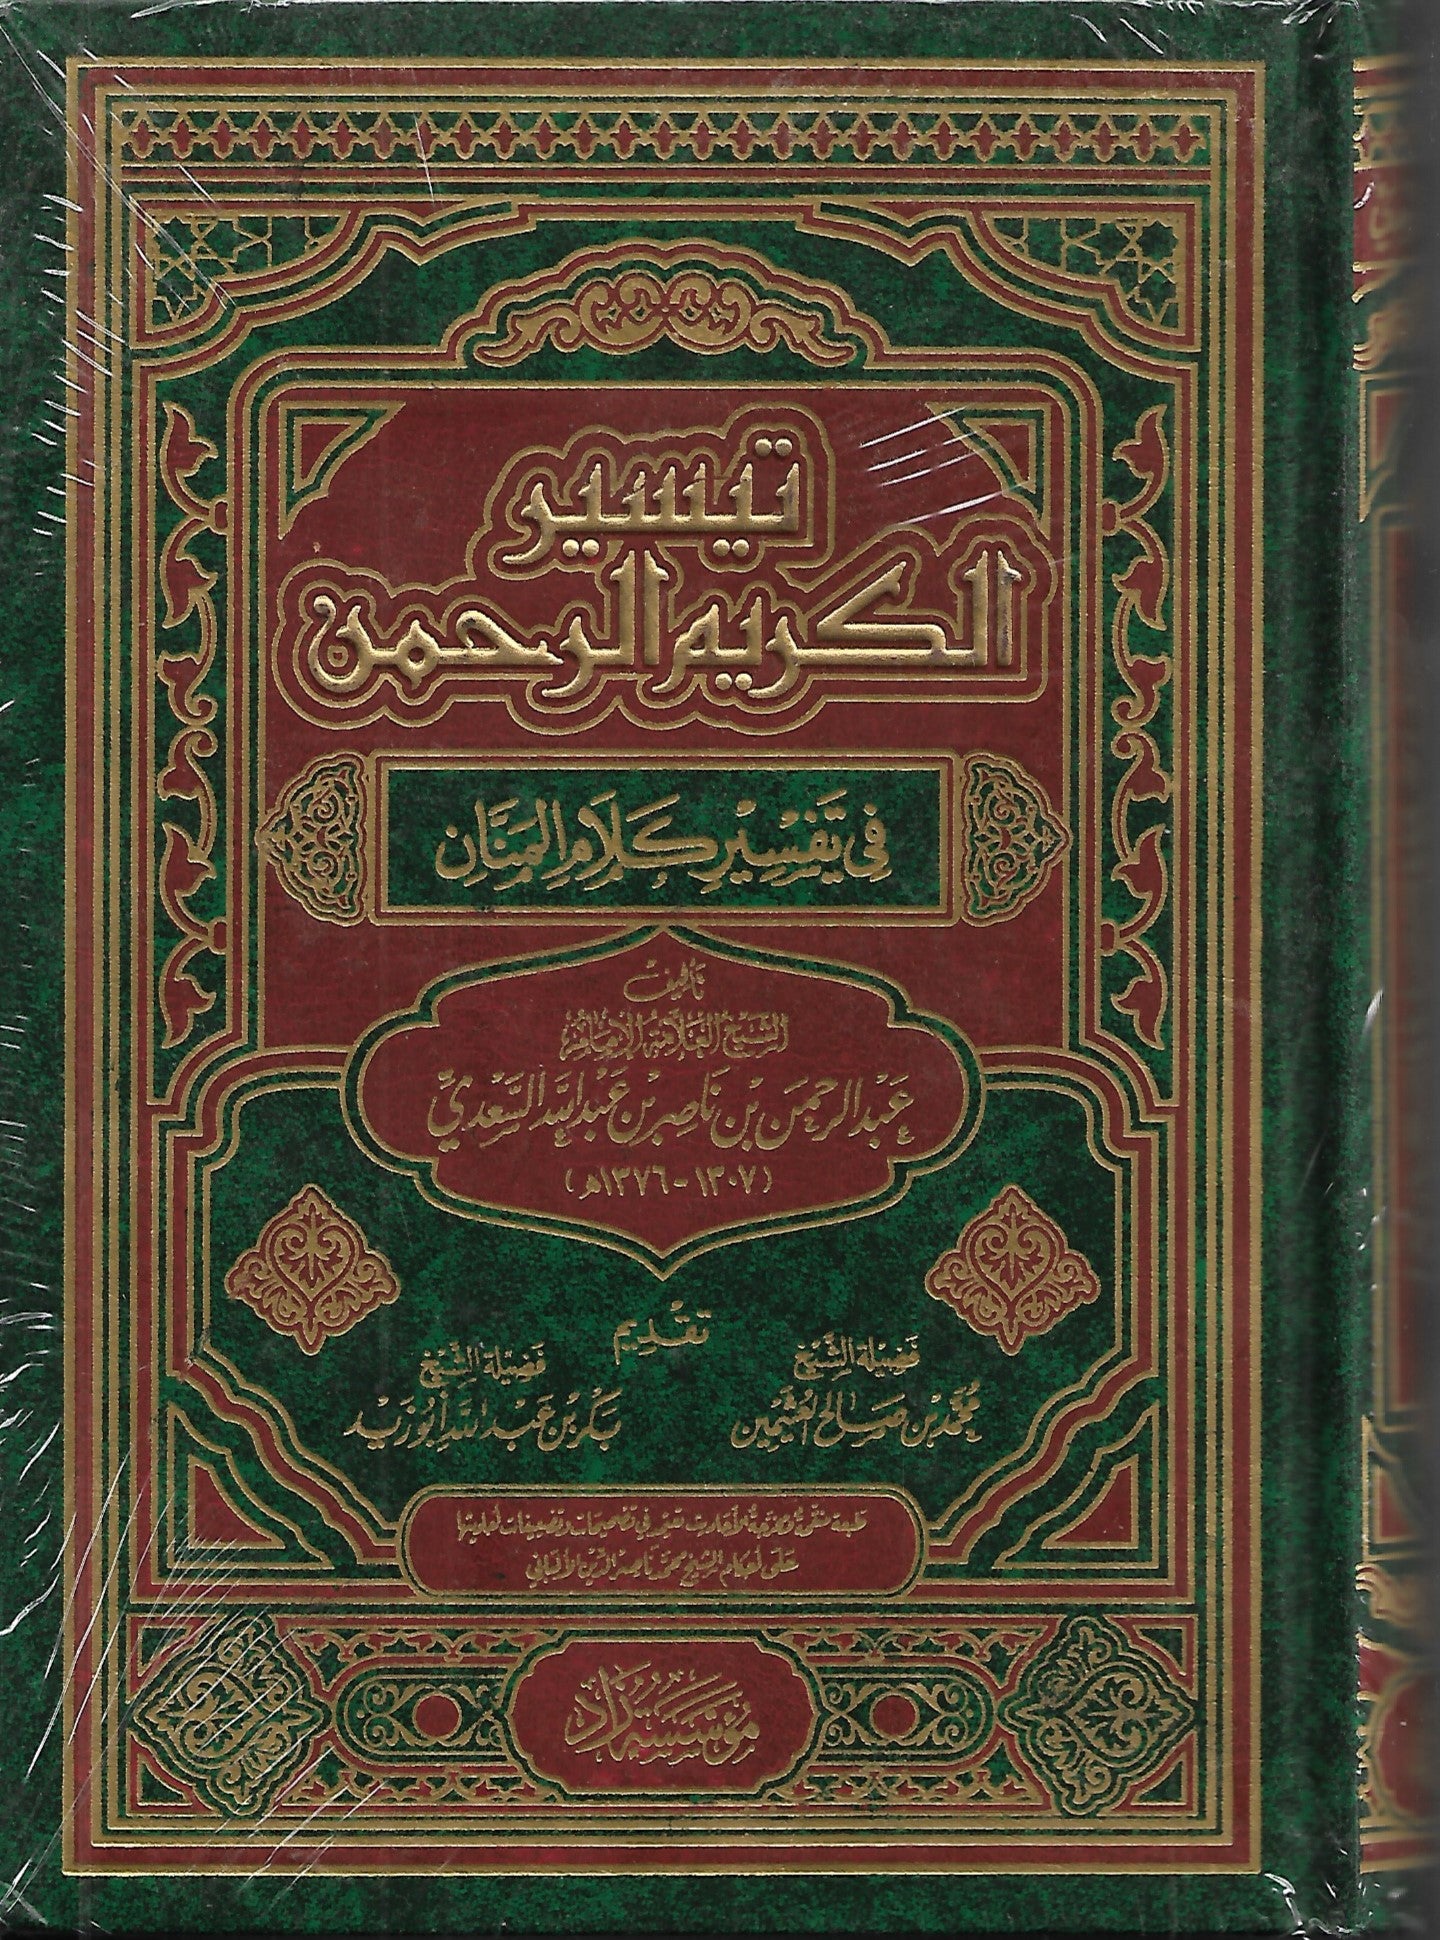 Tayseer Al-Karim Al-Rahman in the interpretation of the words of Al-Manan: Al-Saadi's interpretation